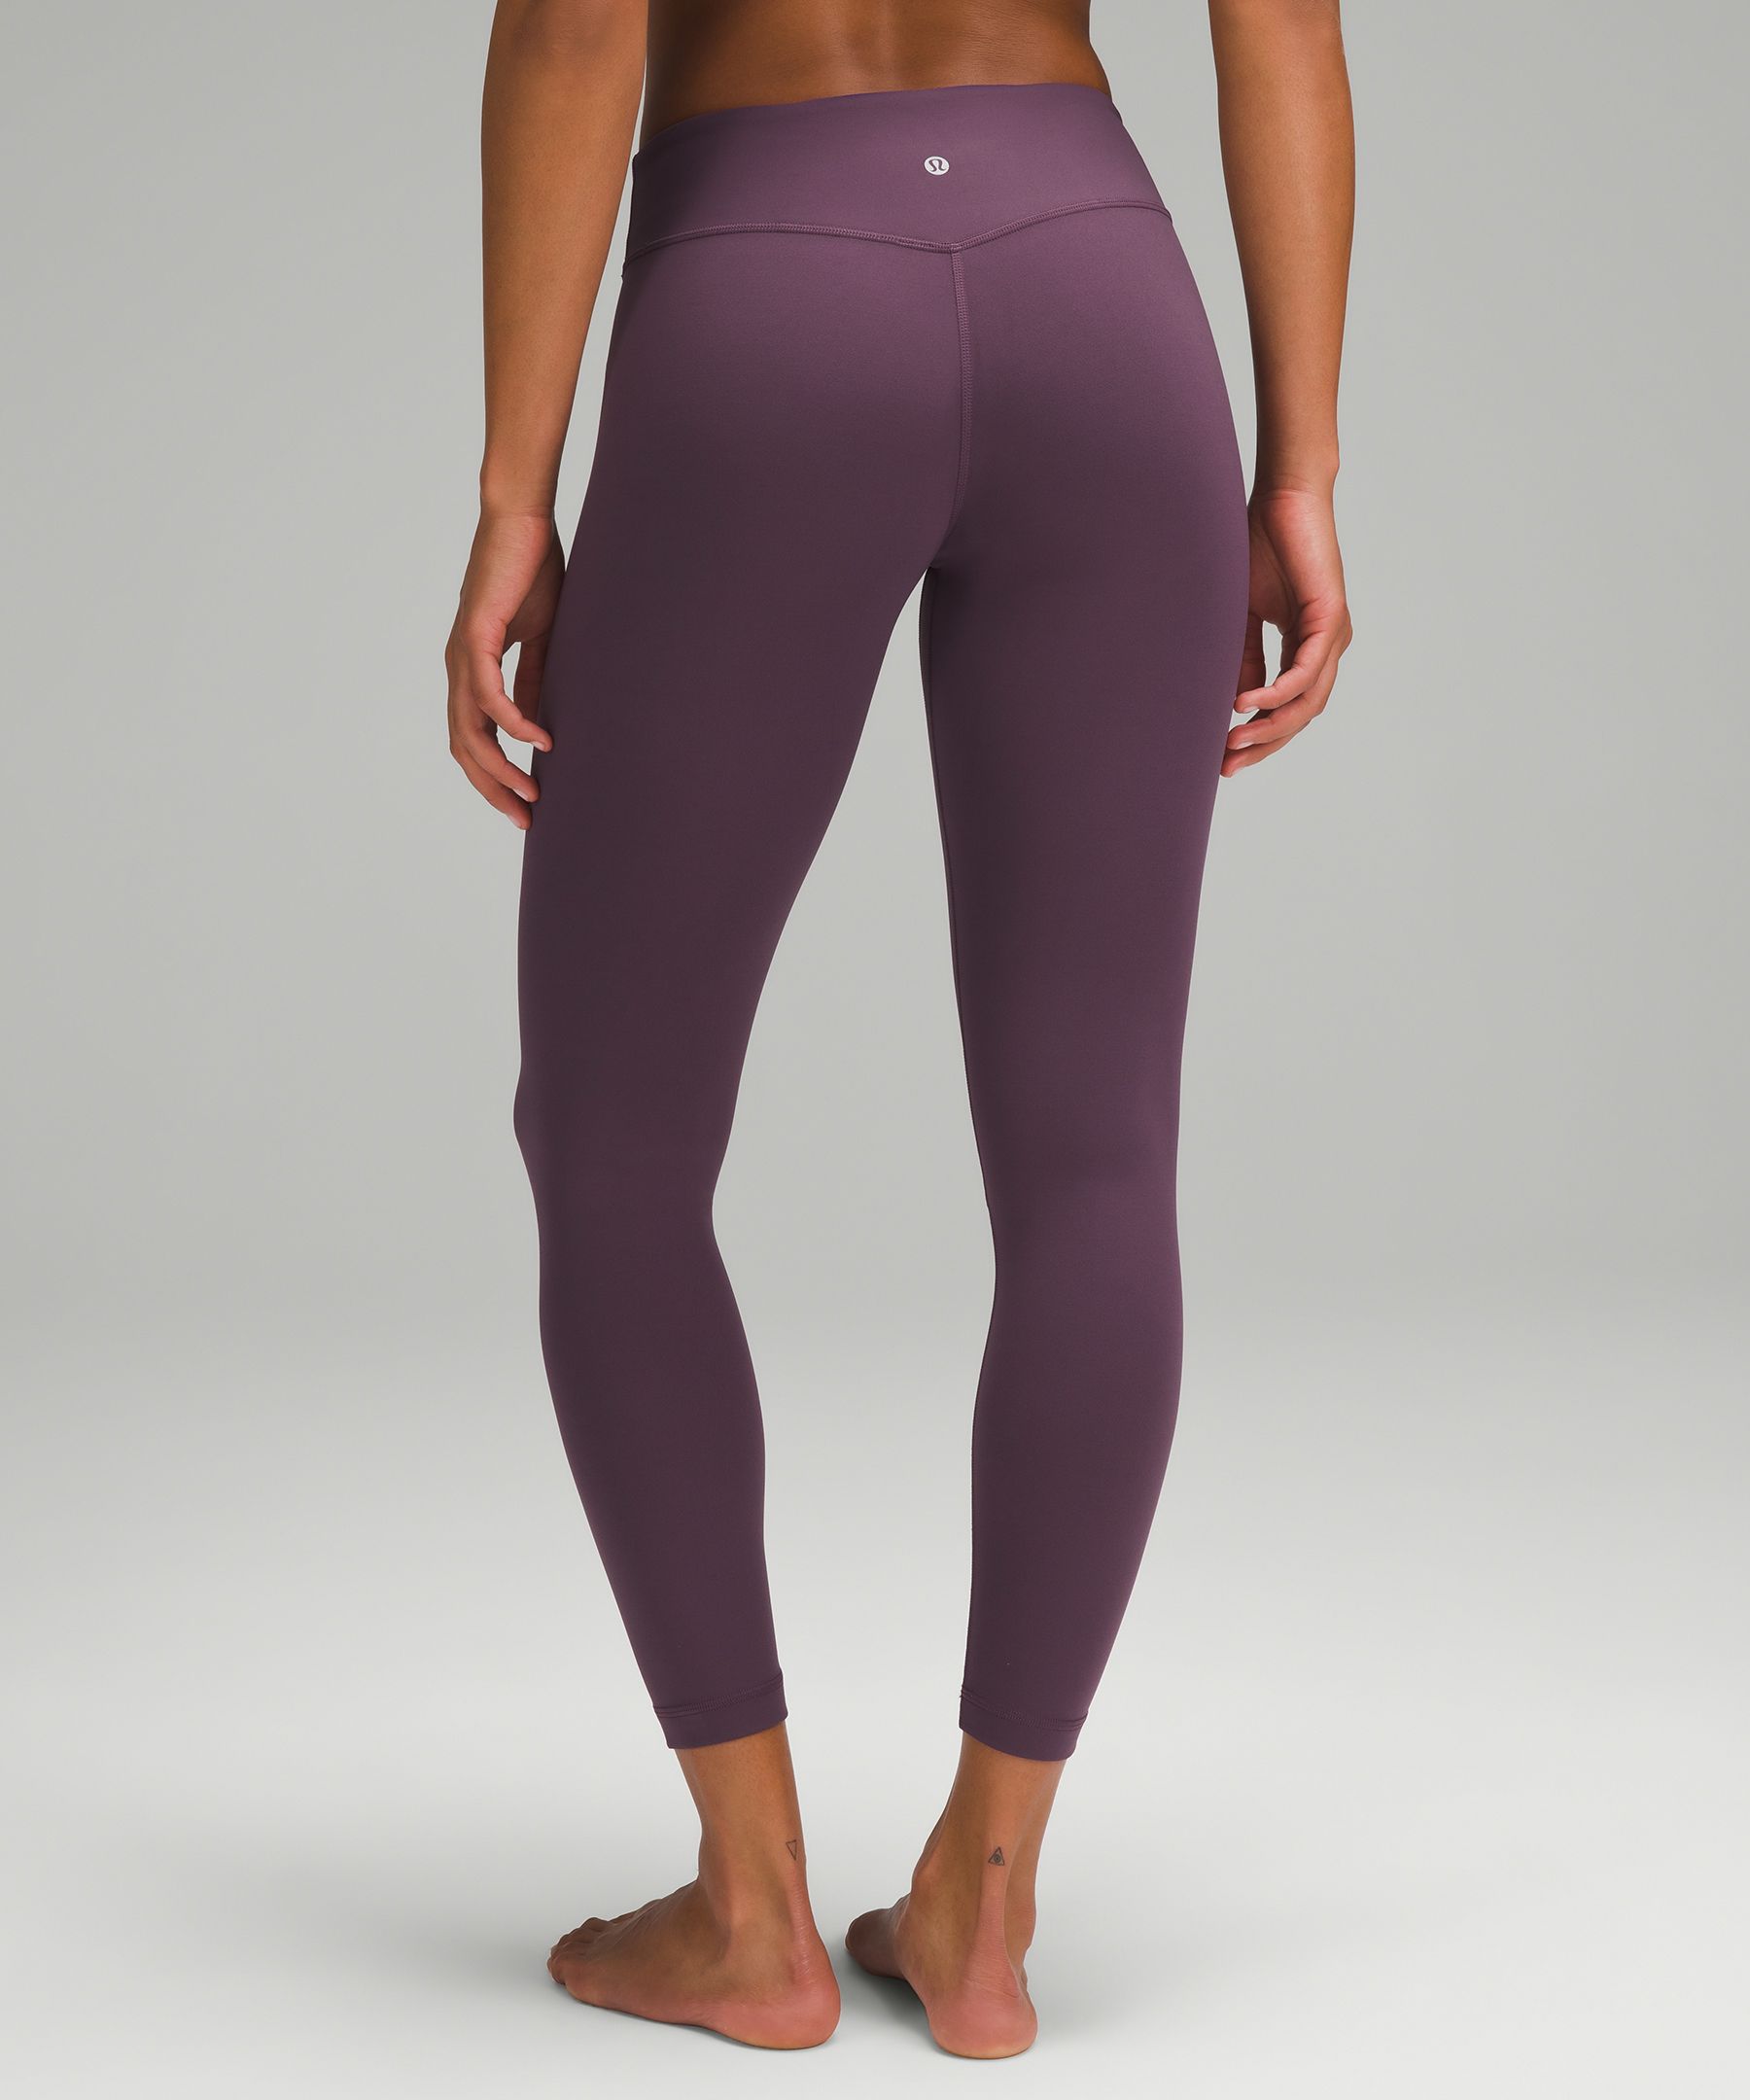 It's official: Lululemon yoga pants are a design classic